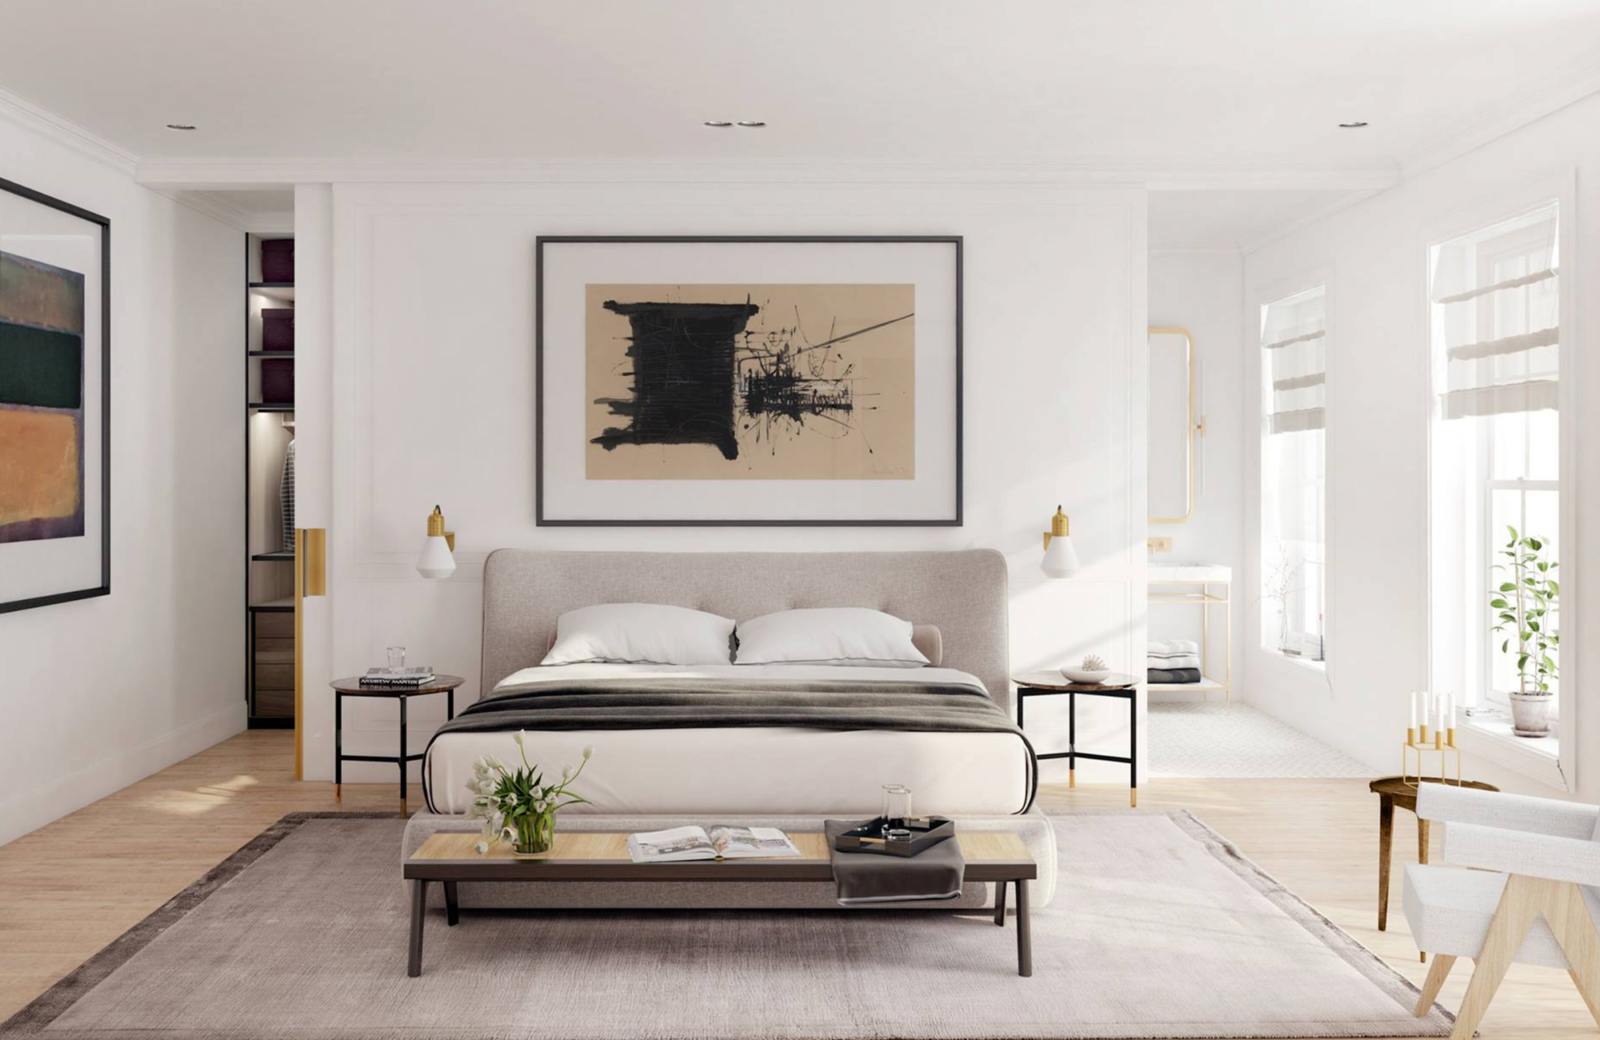 pamela-sandall-design-santa-monica-ca-how-to-prepare-for-your-interior-design-consultation-light-bright-bedroom-with-neutral-decor-and-statement-art-modern